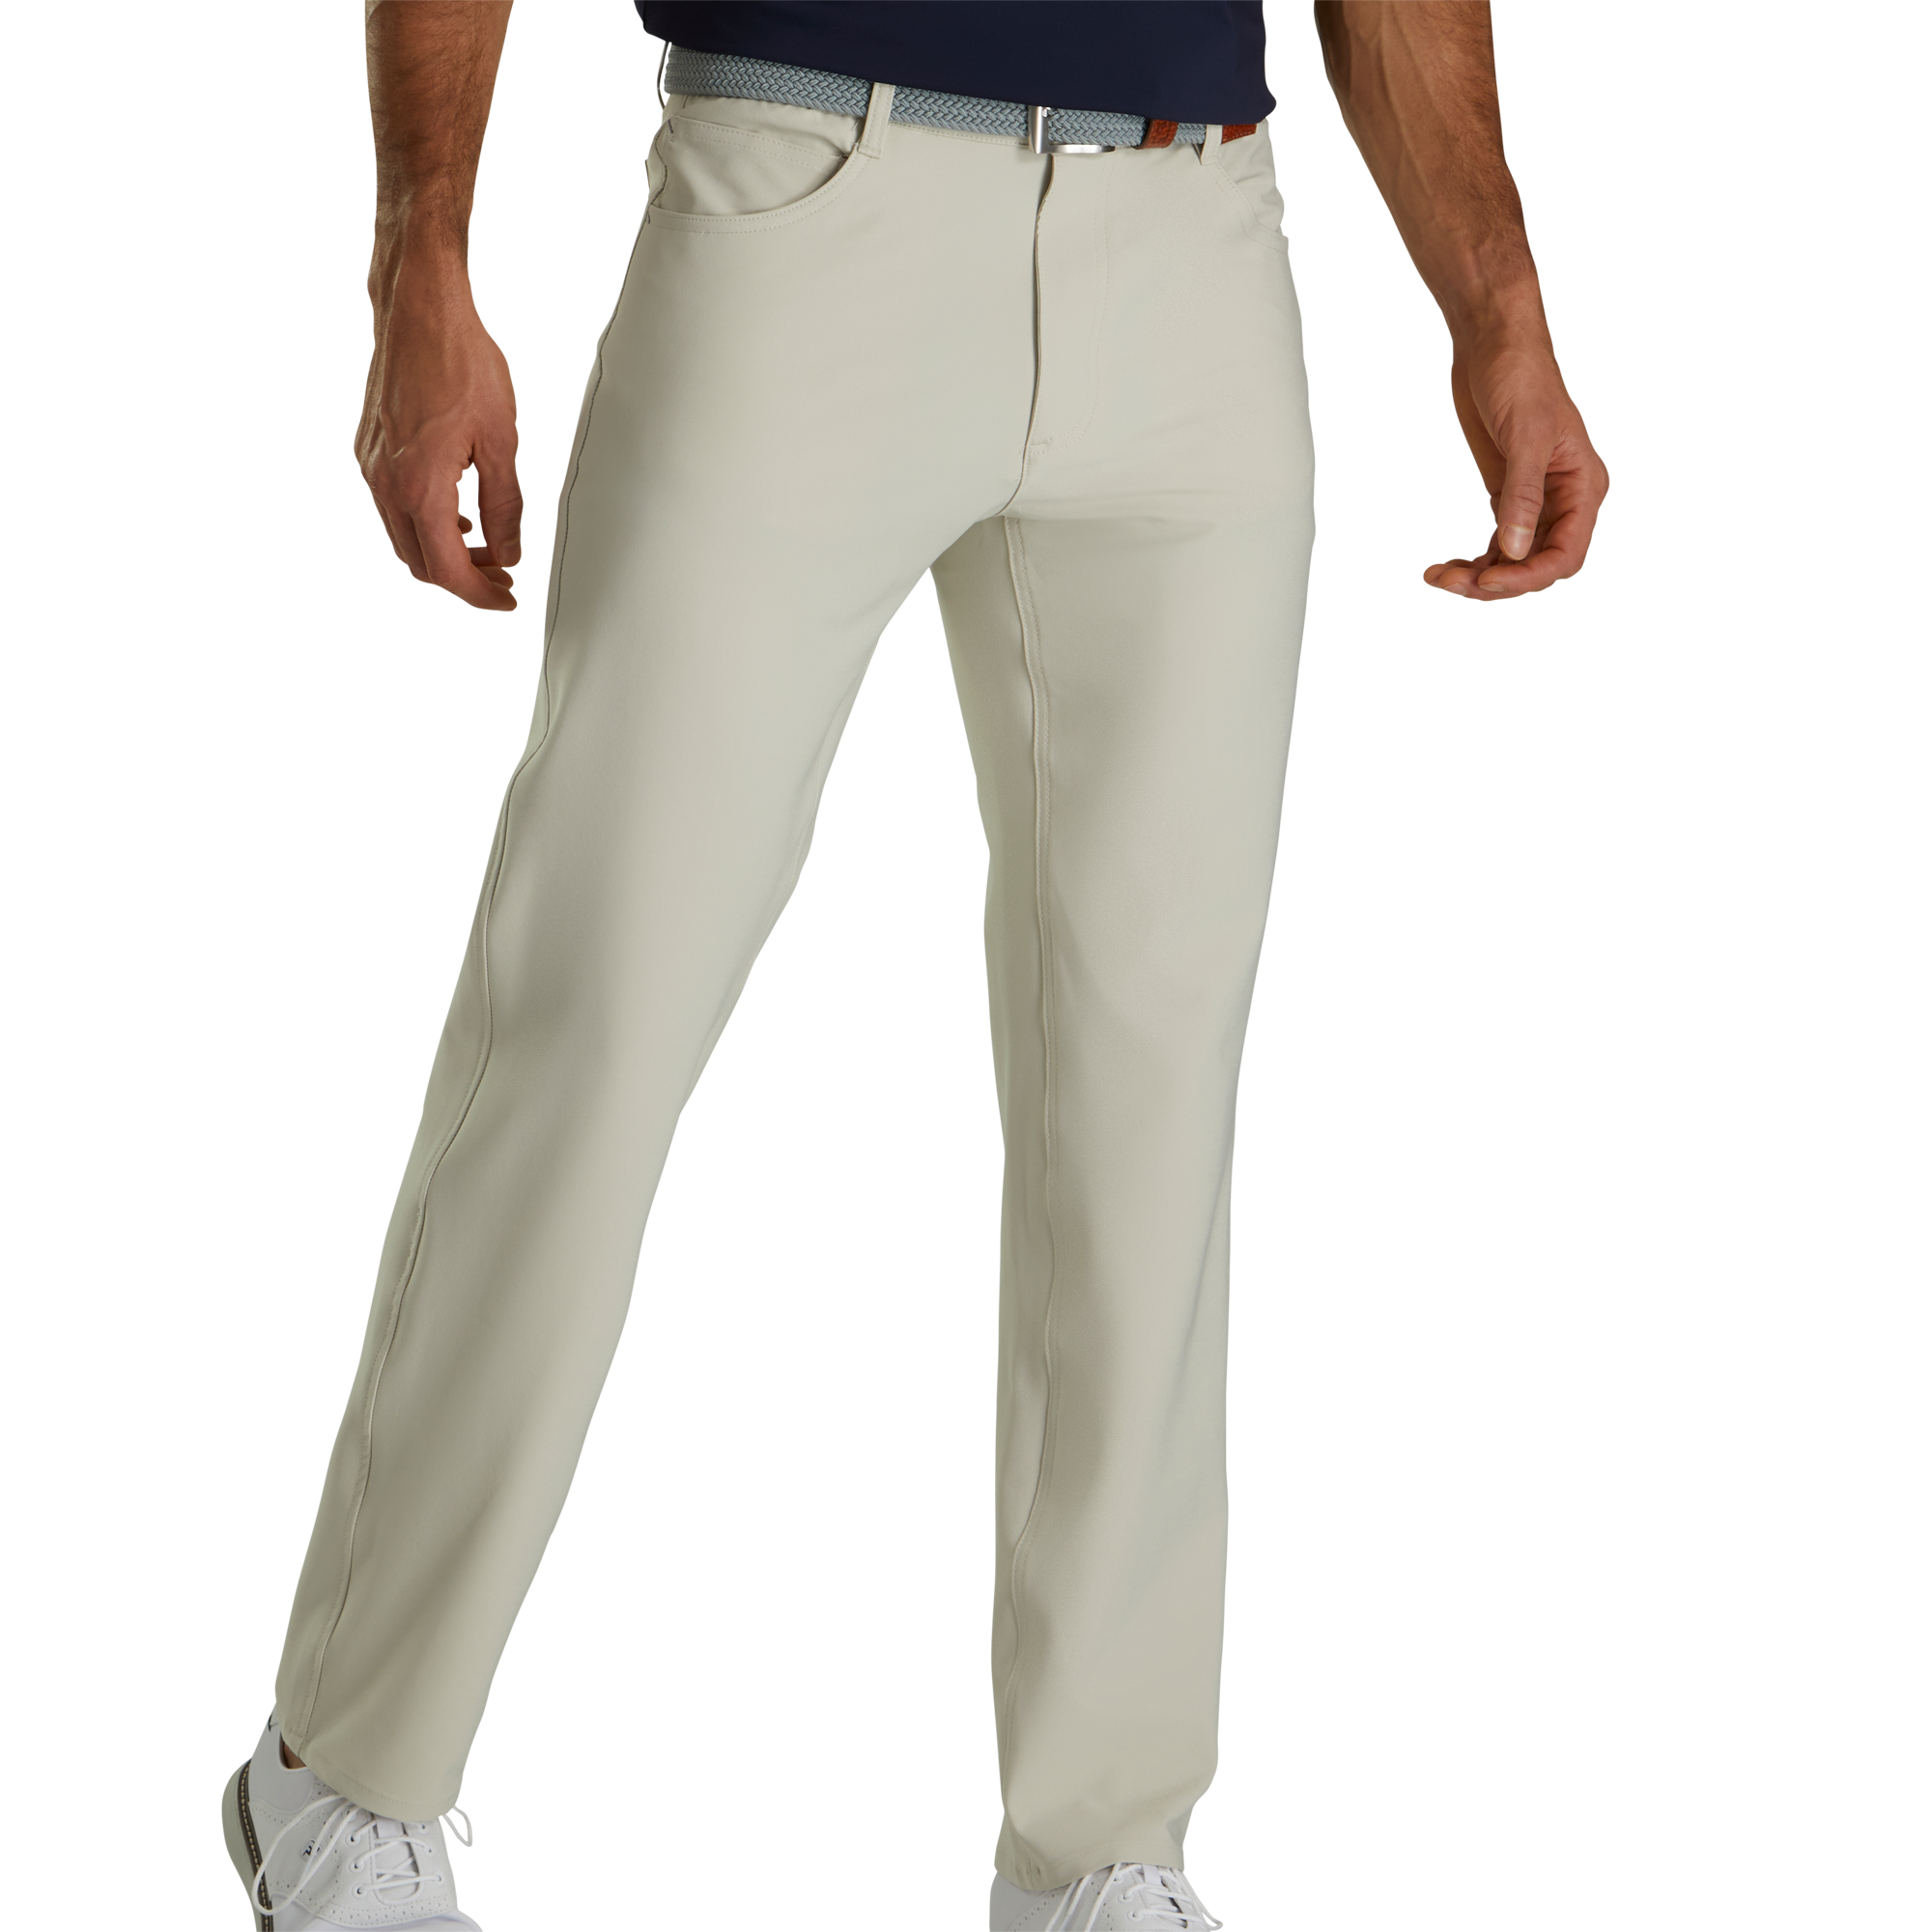 Athletic Golf Pants | Golf Pants for Men at FootJoy